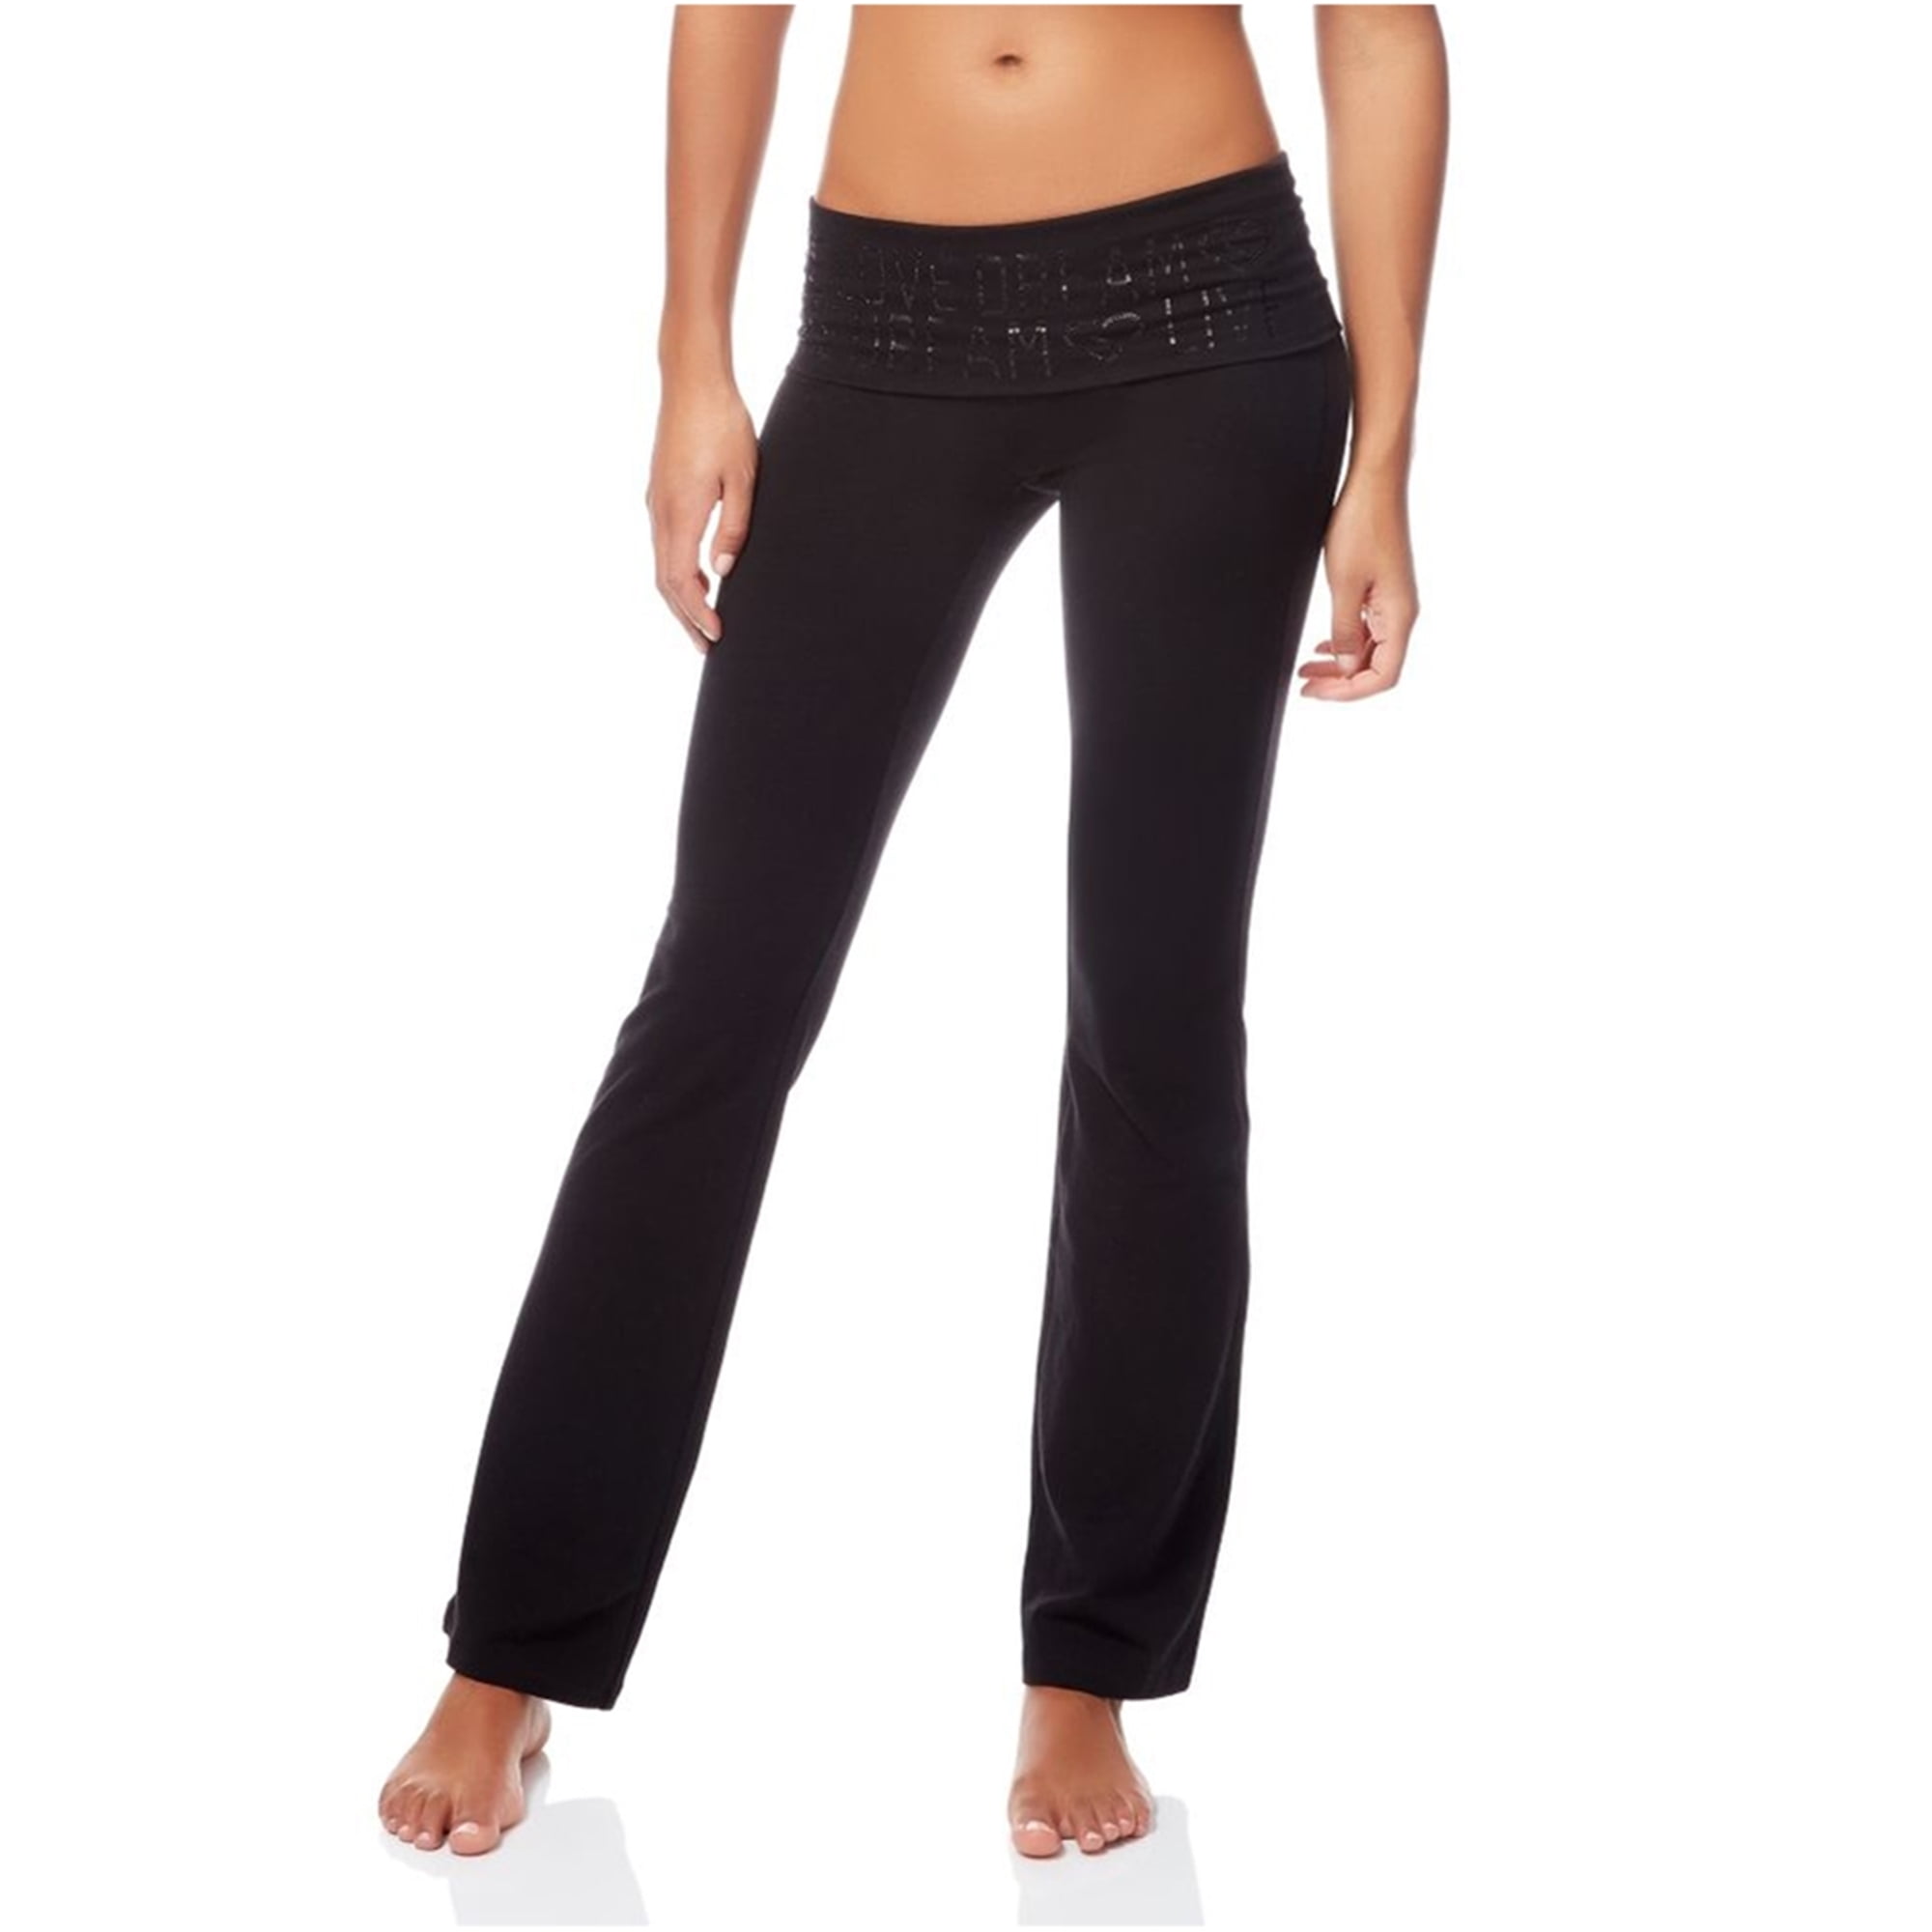 aeropostale yoga pants products for sale | eBay